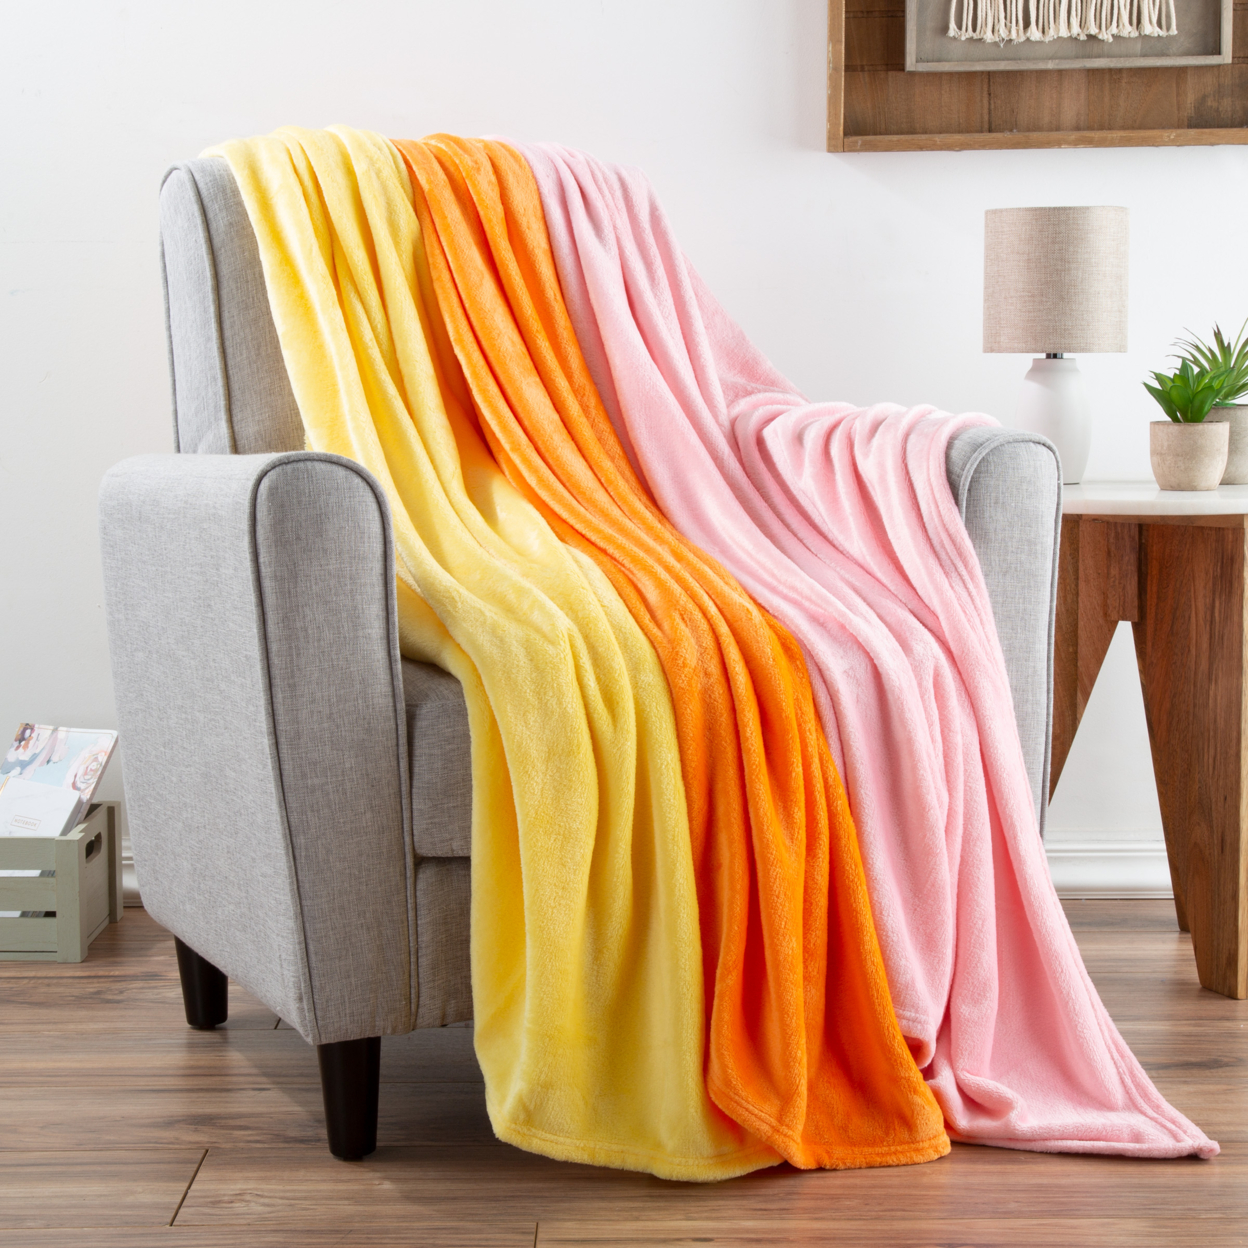 Fleece Throw Blanket- Set Of 3- Yellow, Orange & Pink Plush 60 X 50 Blankets- Soft & Cozy